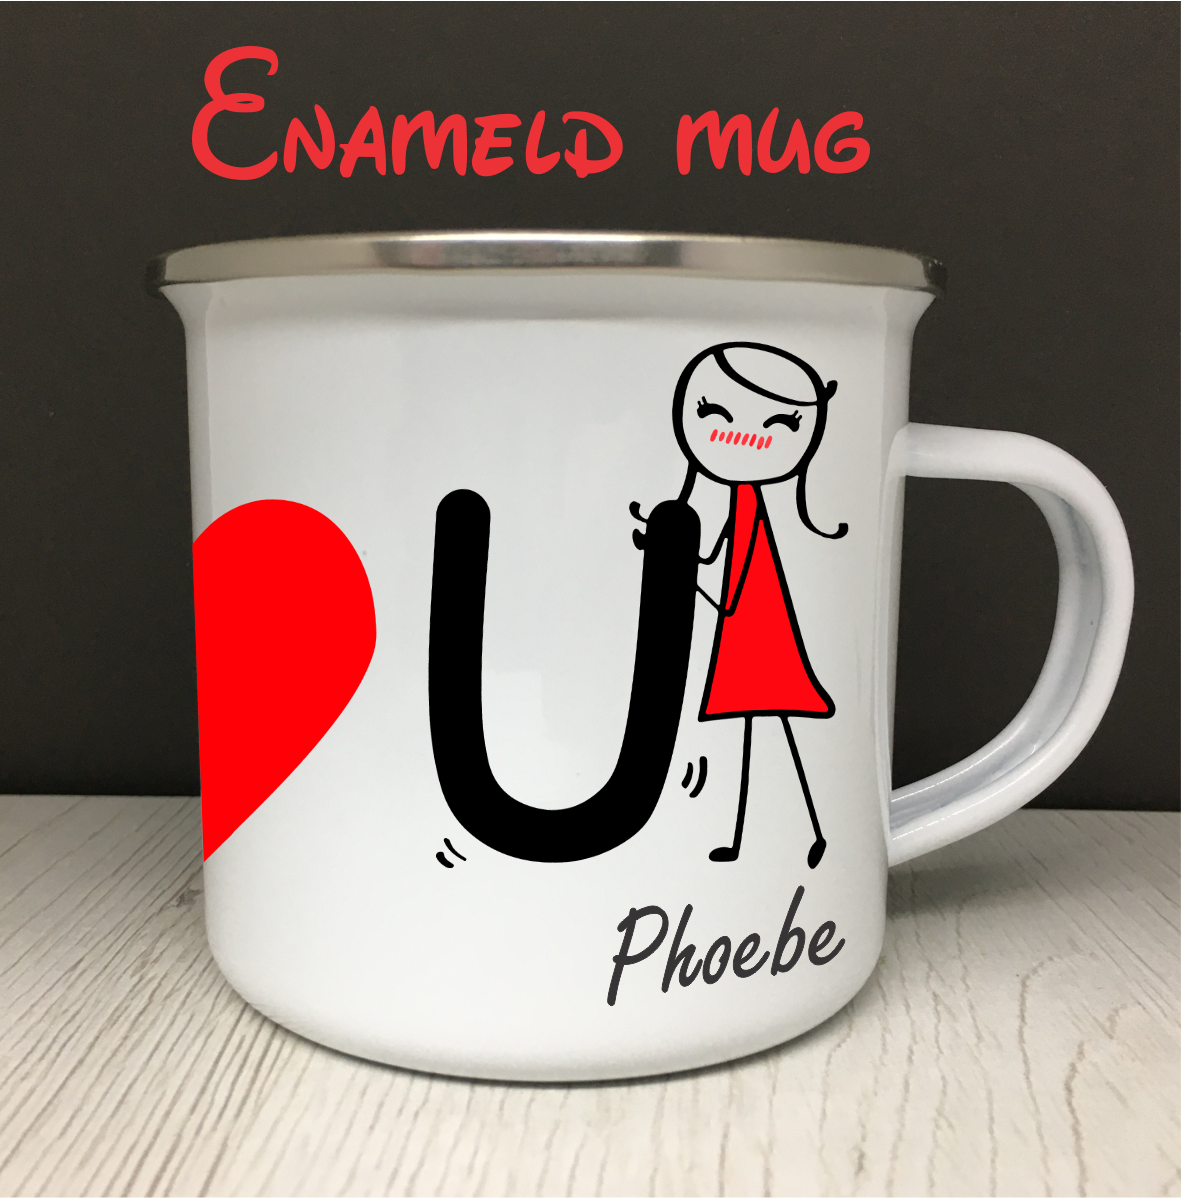 Personalized Heart Mug-I❤U (set of 2 mugs)-cutegifts.eu